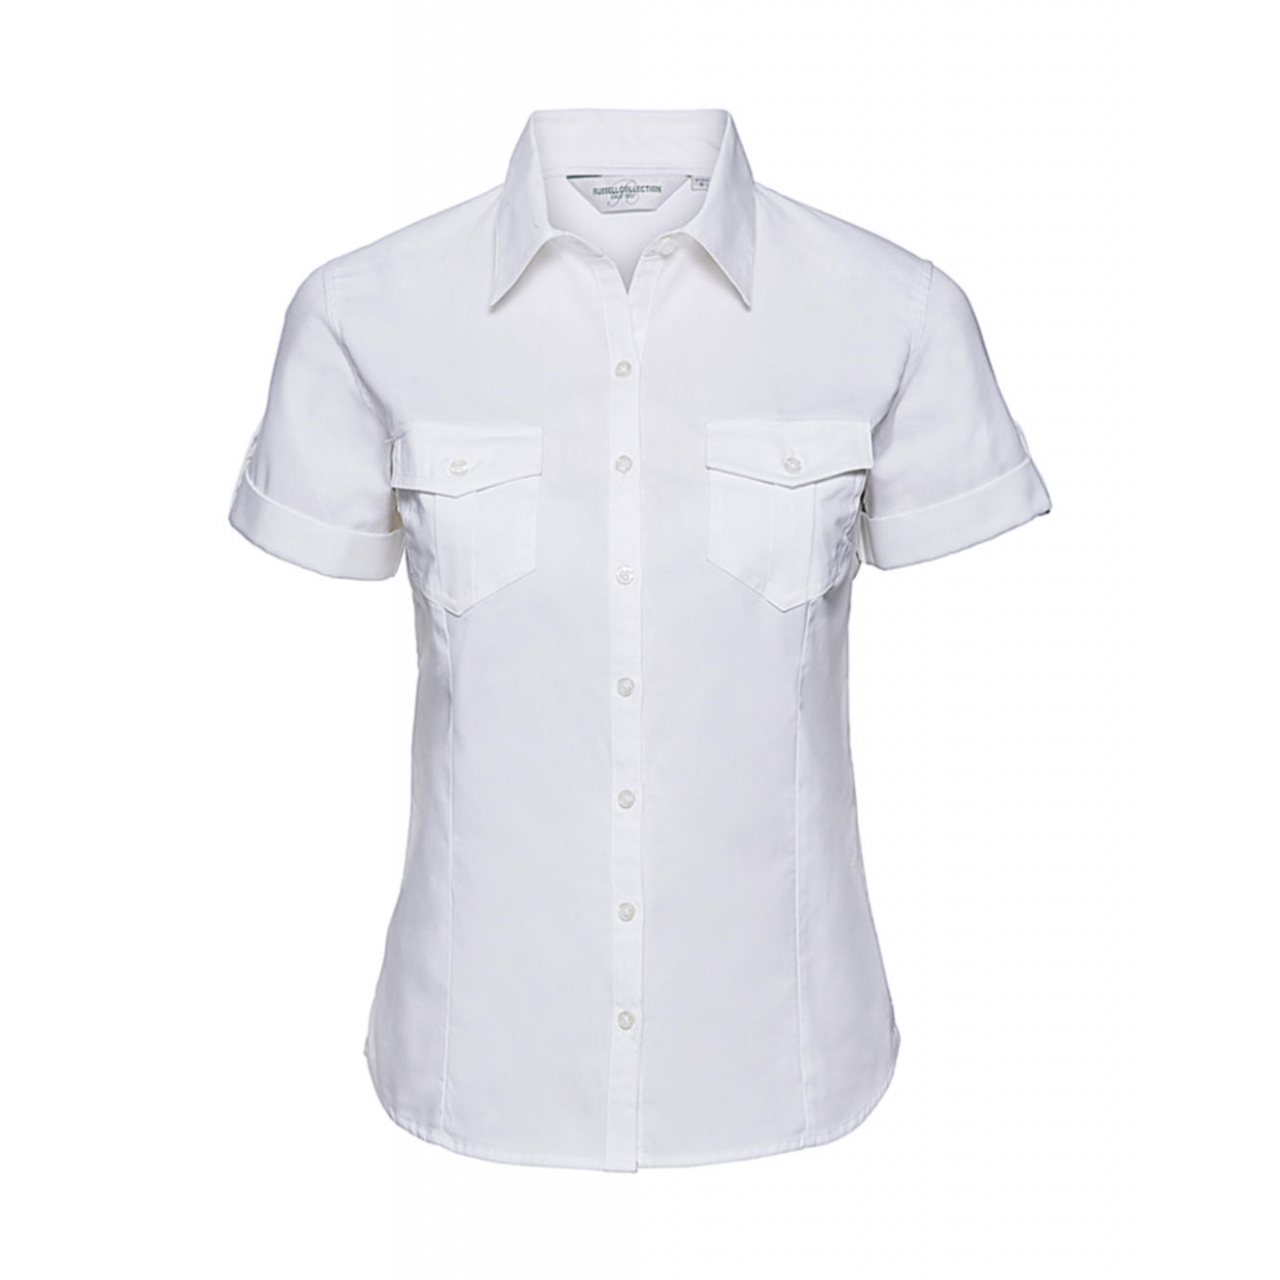 Košile dámská krátký rukáv Rusell Roll Sleeve - bílá, XS